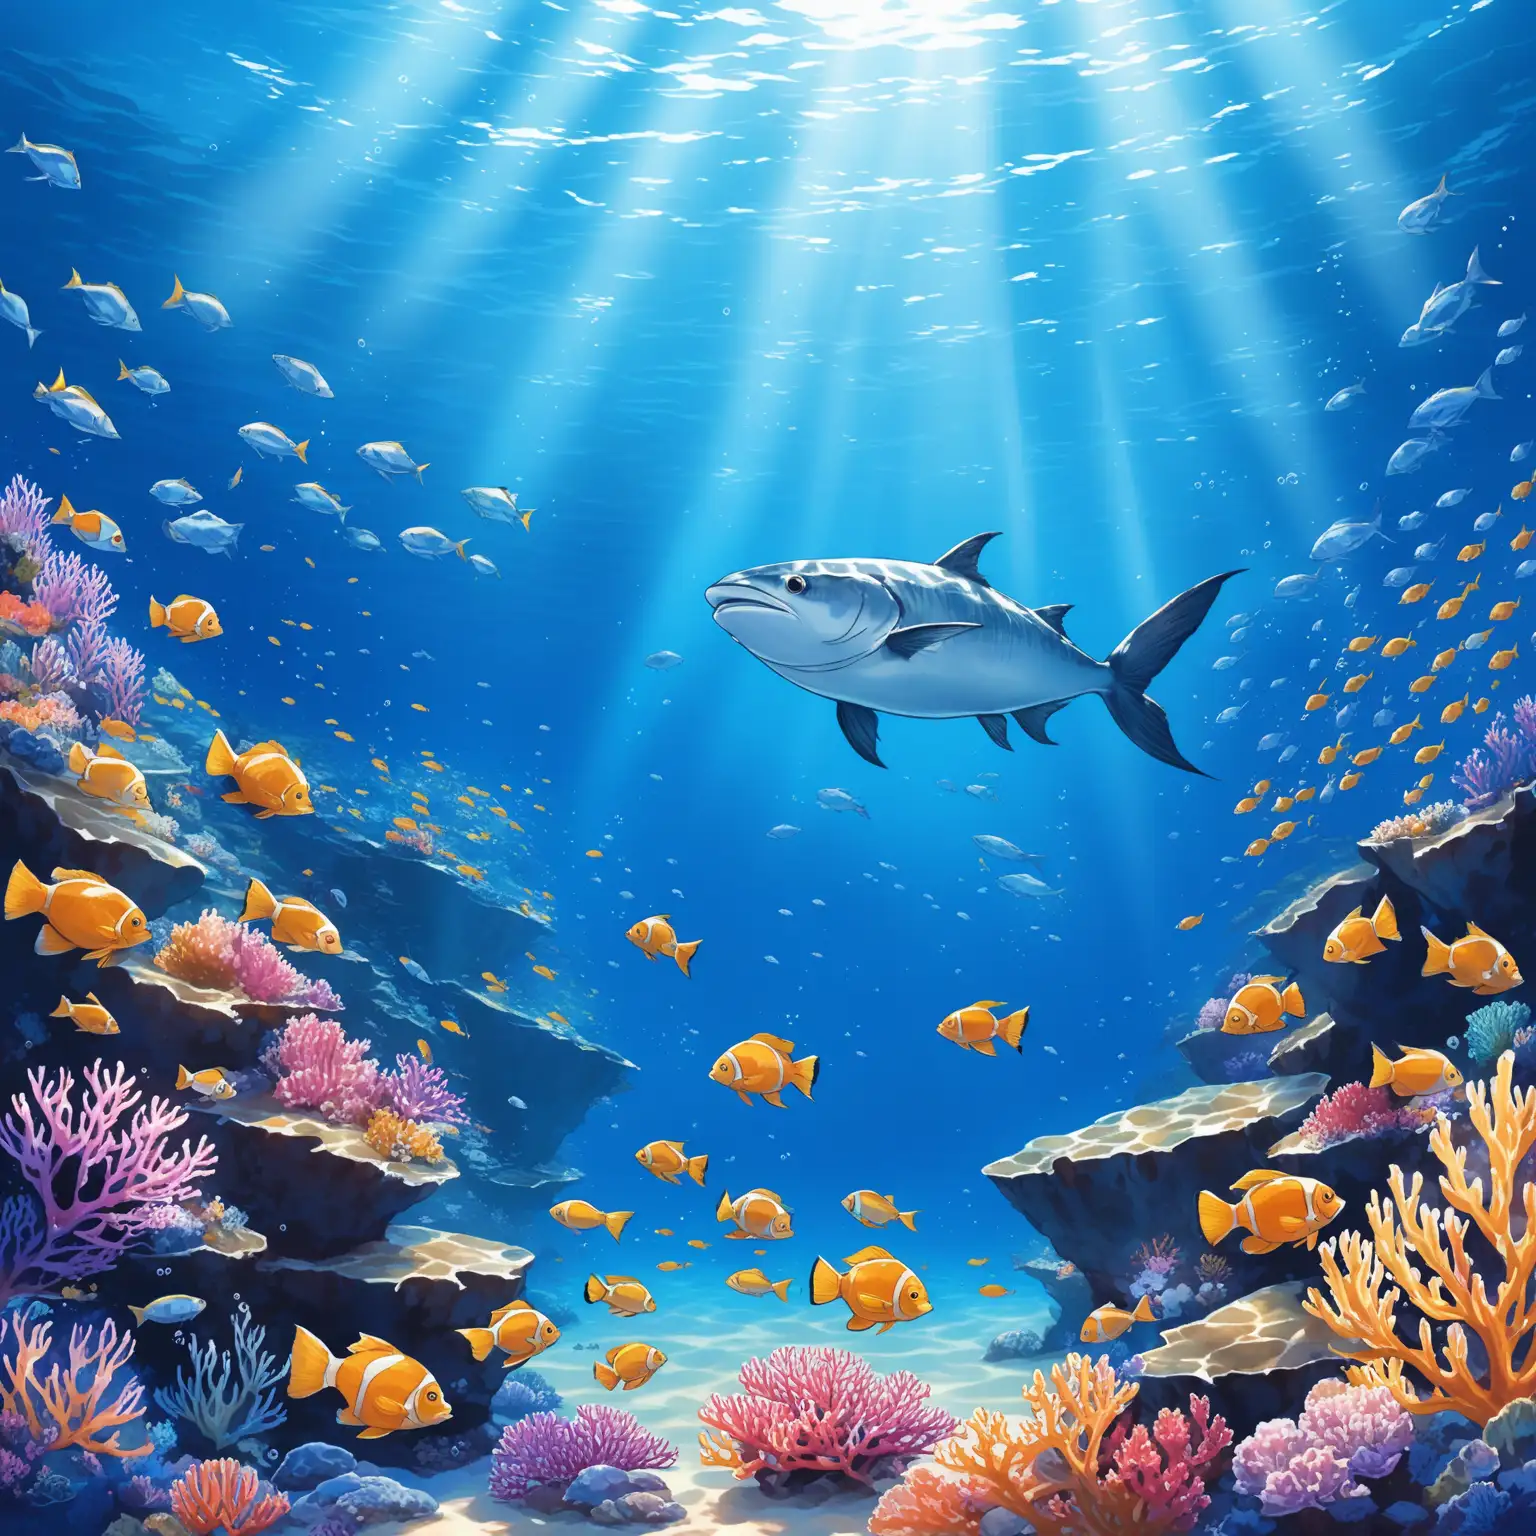 Vibrant Underwater Scene with Diverse Fish Species